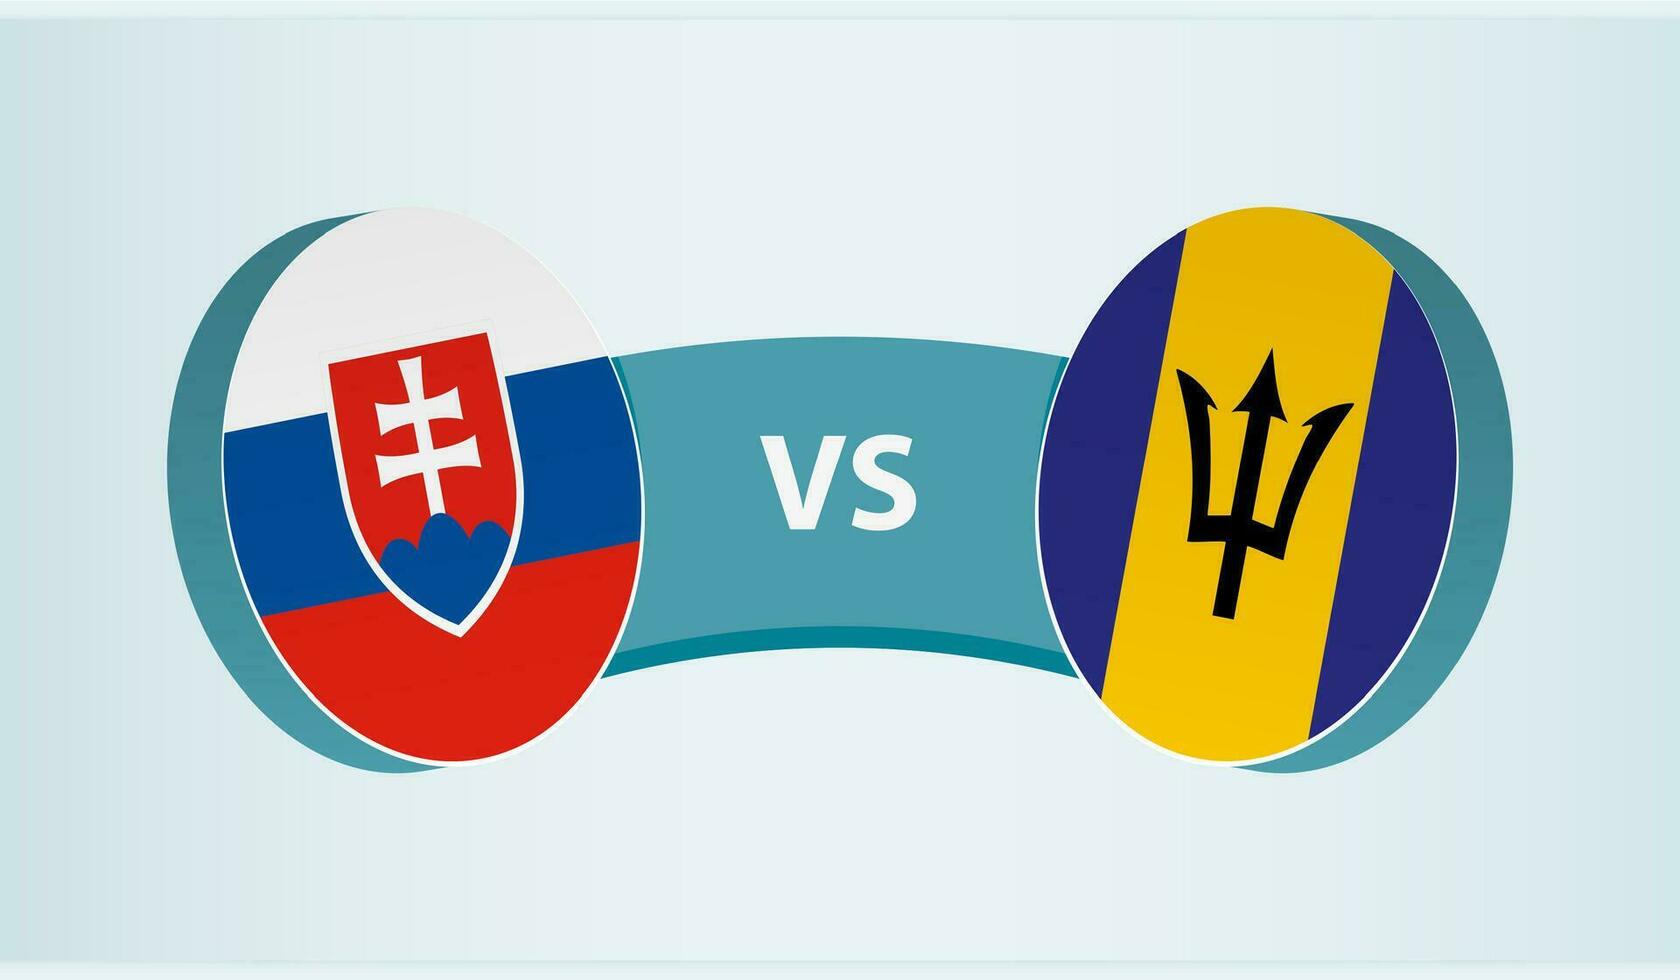 Slovakia versus Barbados, team sports competition concept. vector